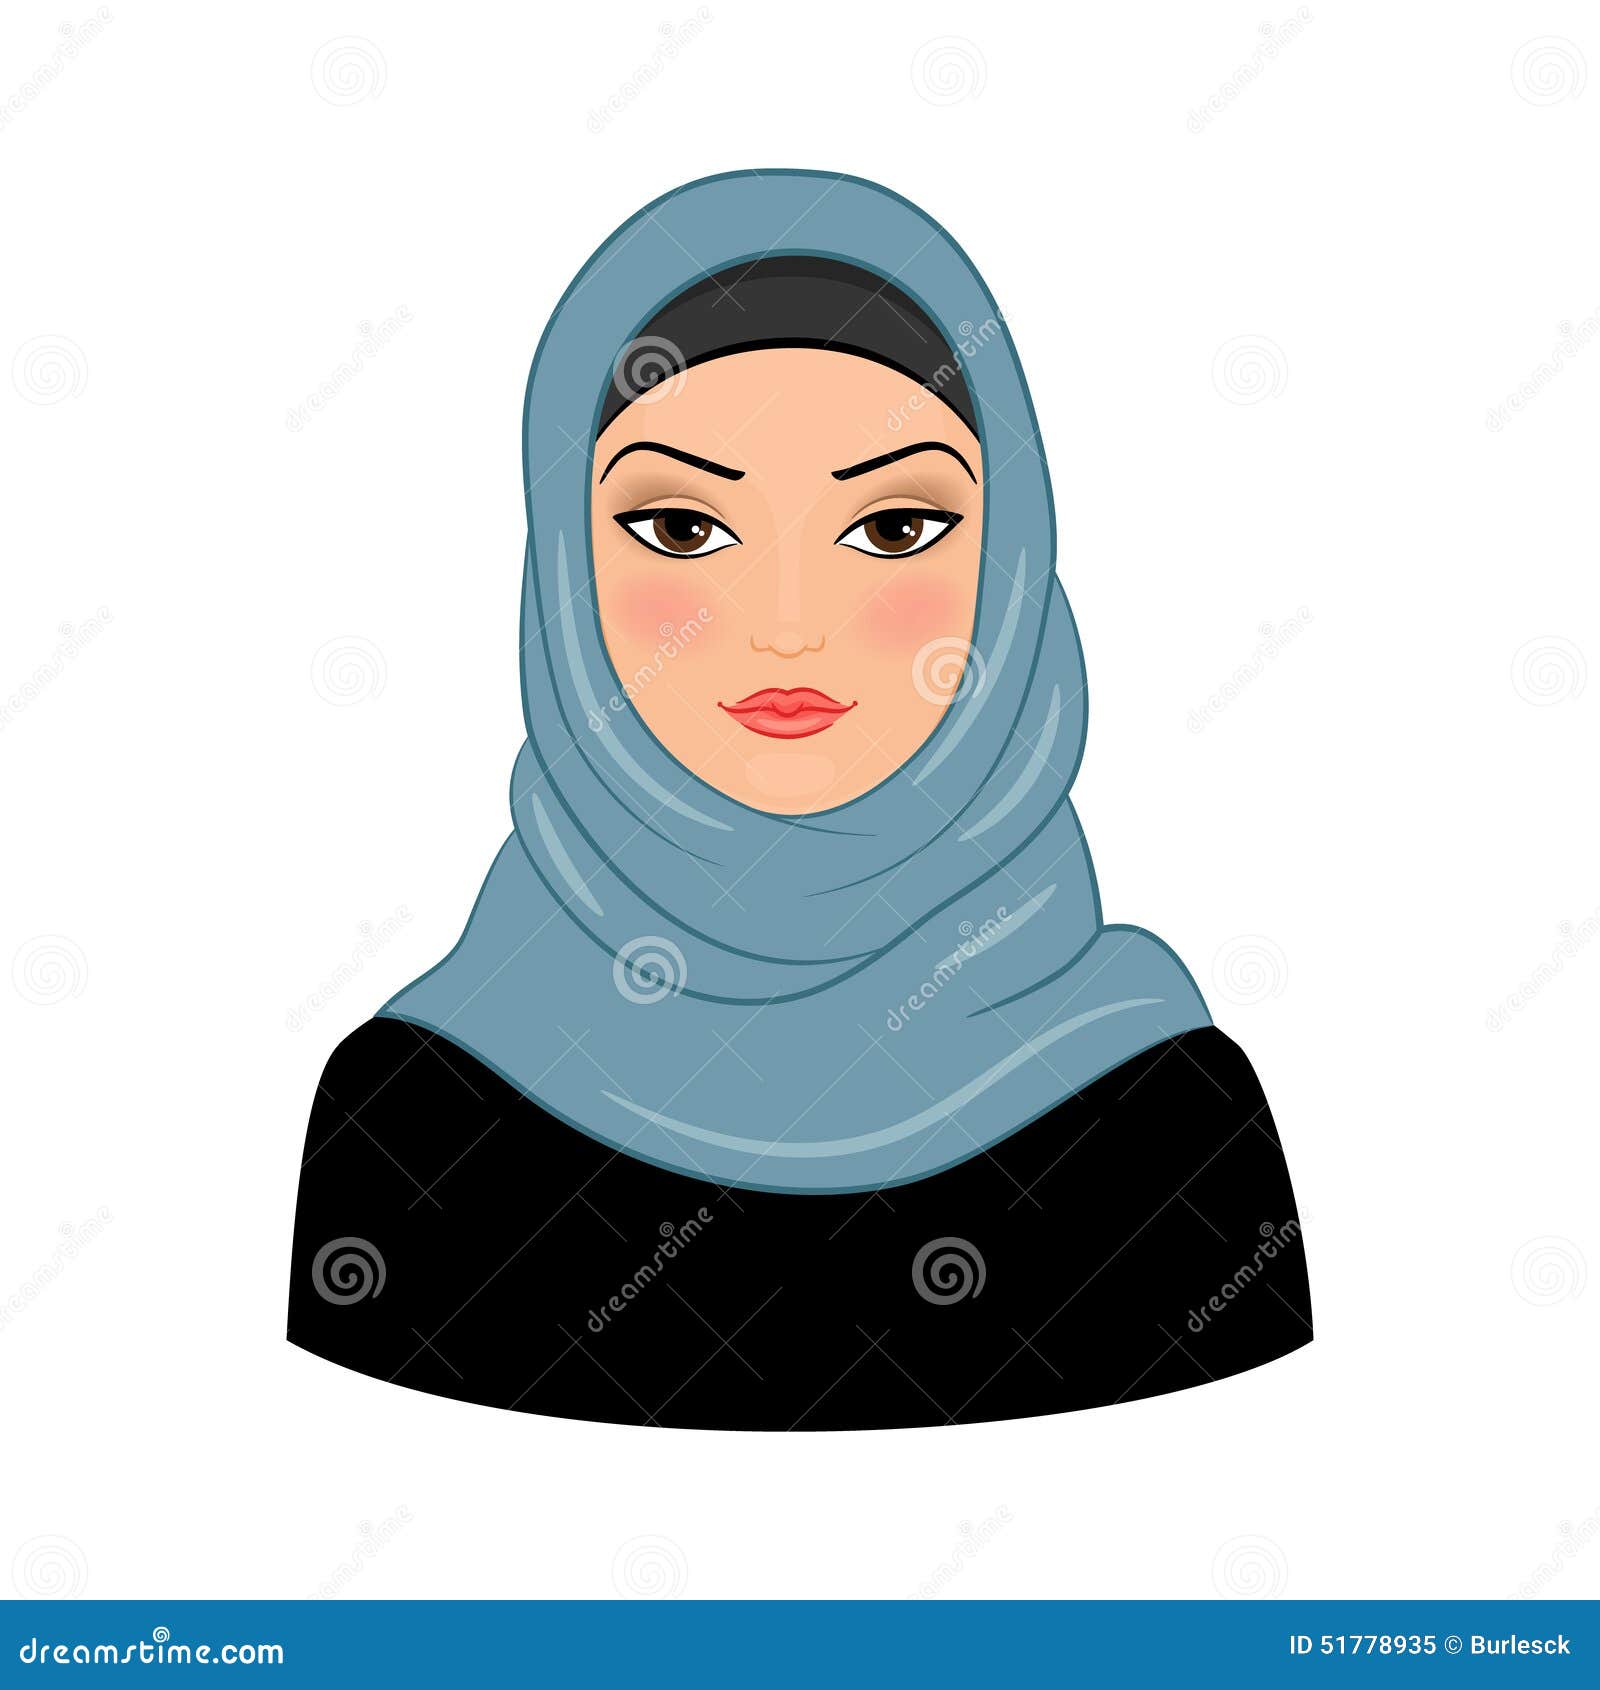 clipart muslim girl - photo #18